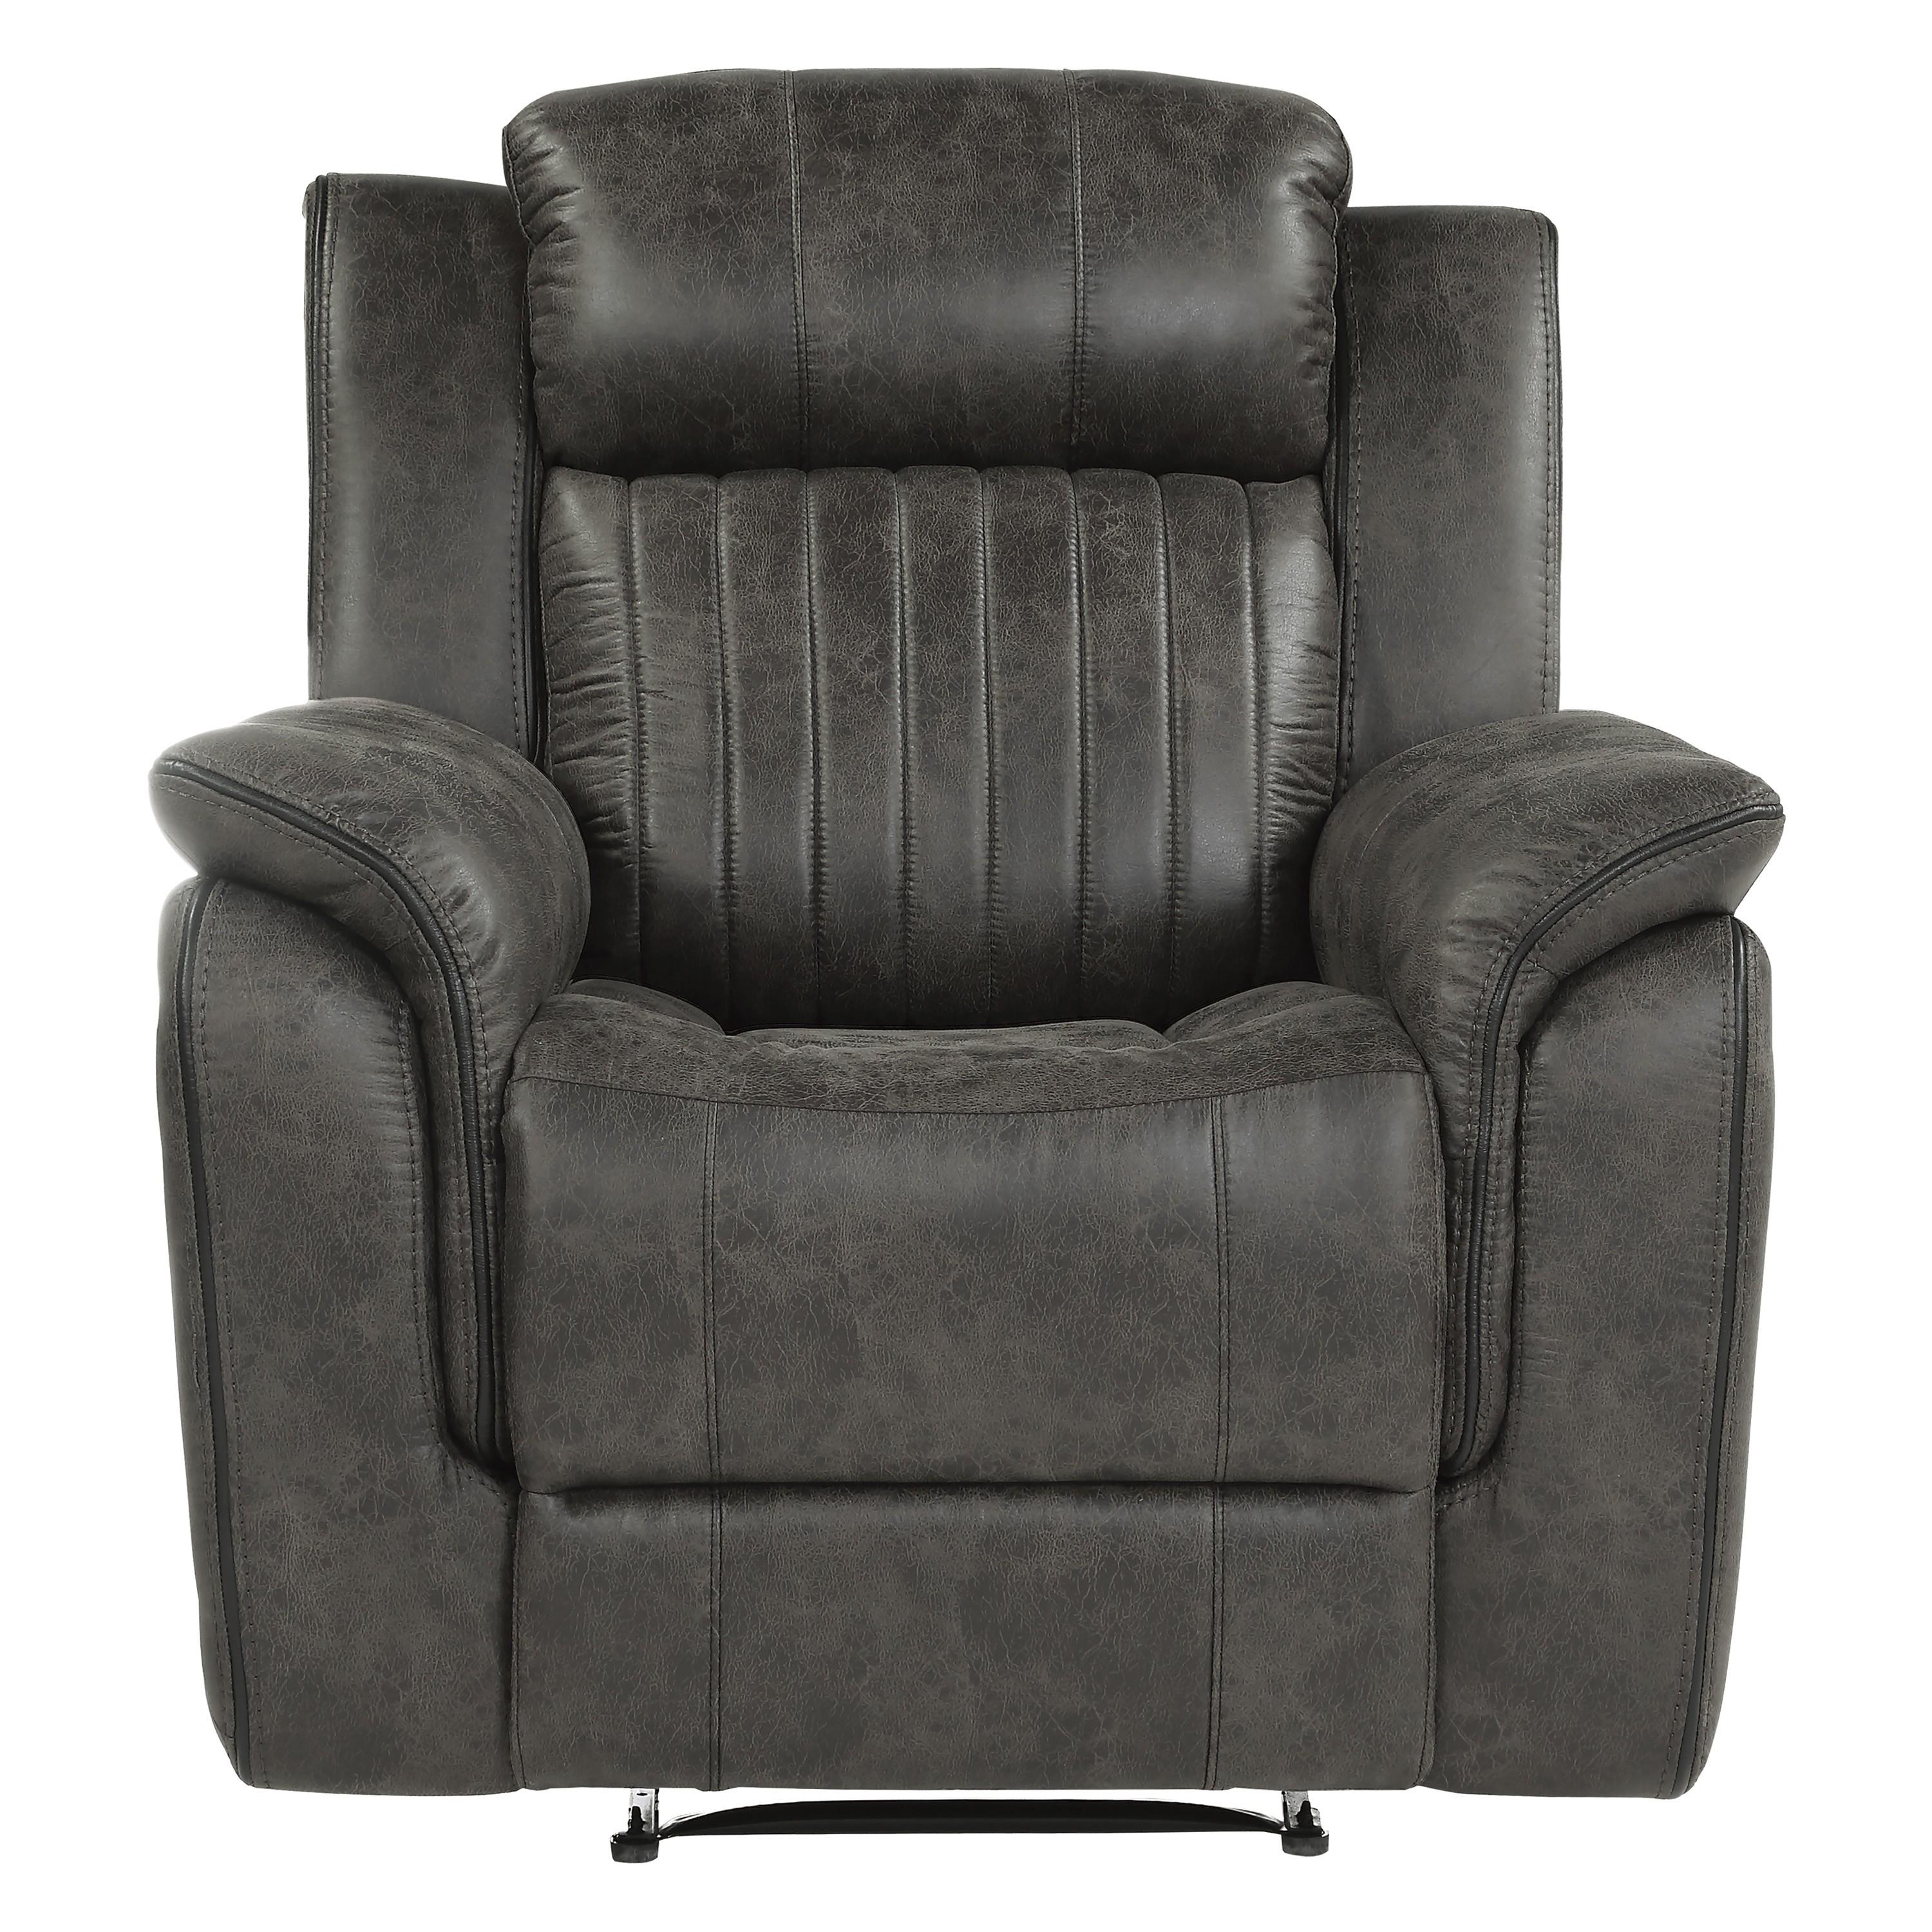 Transitional Reclining Chair 9479BRG-1 Centeroak 9479BRG-1 in Gray Microfiber